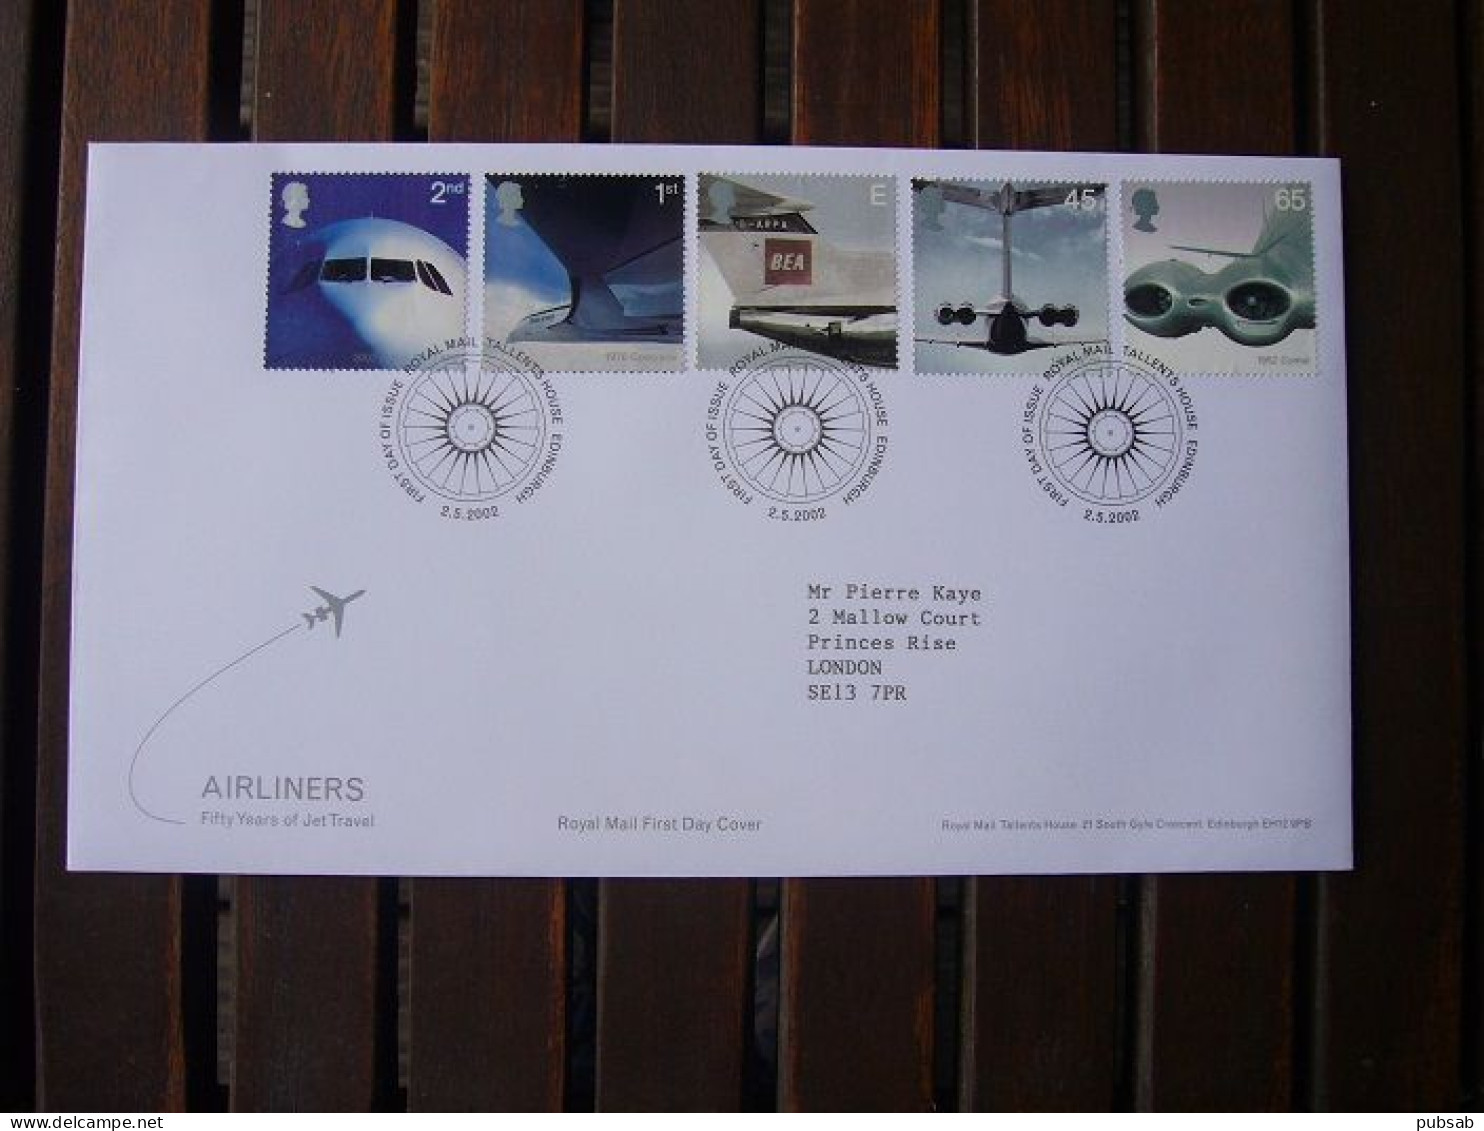 Avion / Airplane / BRITISH AIRWAYS / Airbus - Concorde - Trident - VC-10 - Comet / May 2,2002 - 2001-2010 Decimal Issues